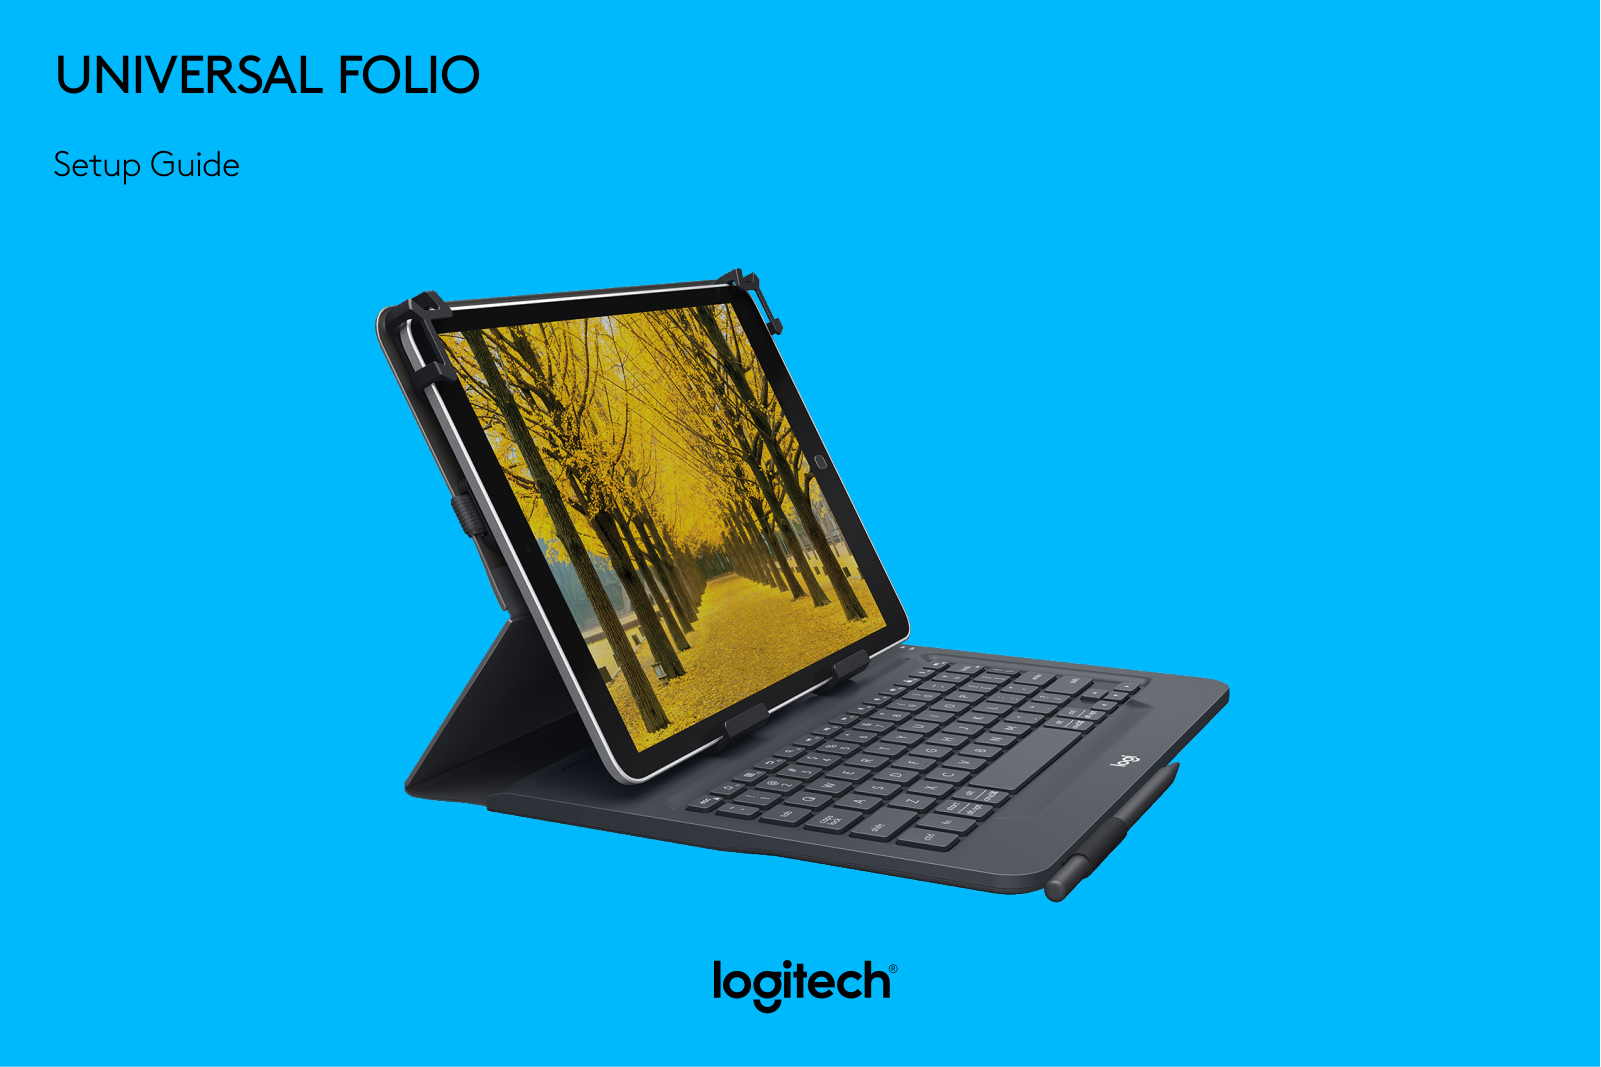 Logitech Universal Folio User Manual